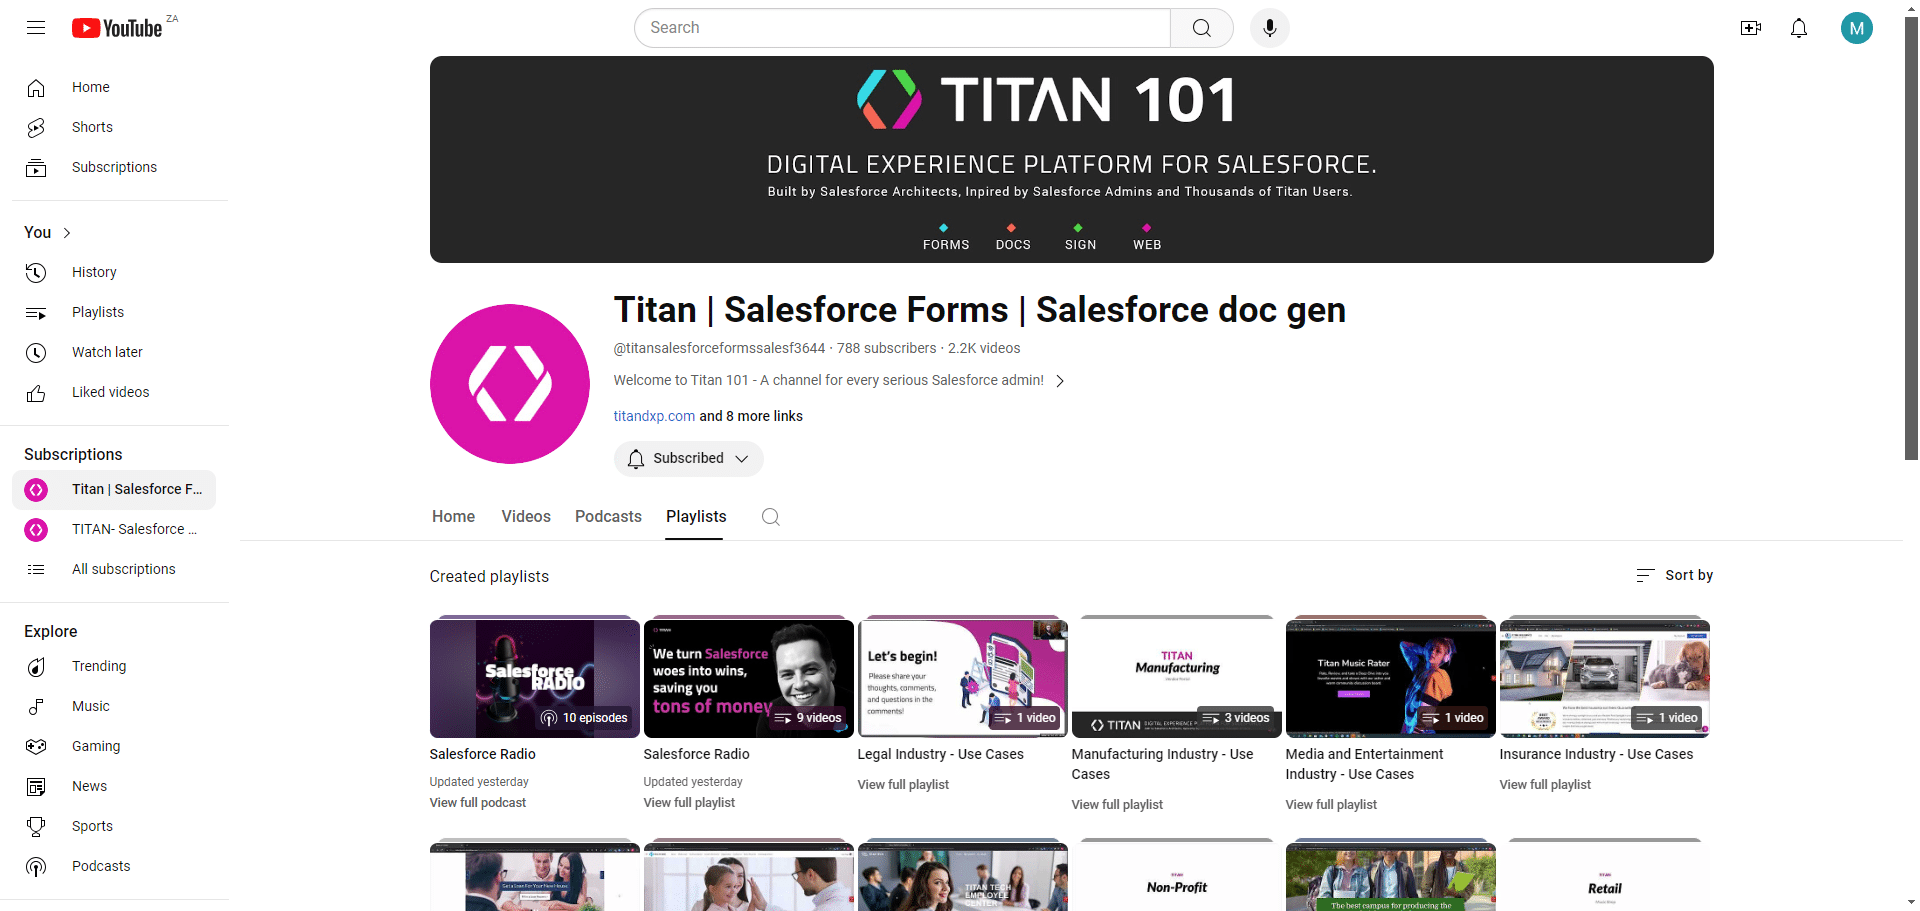 Titan's YouTube channel